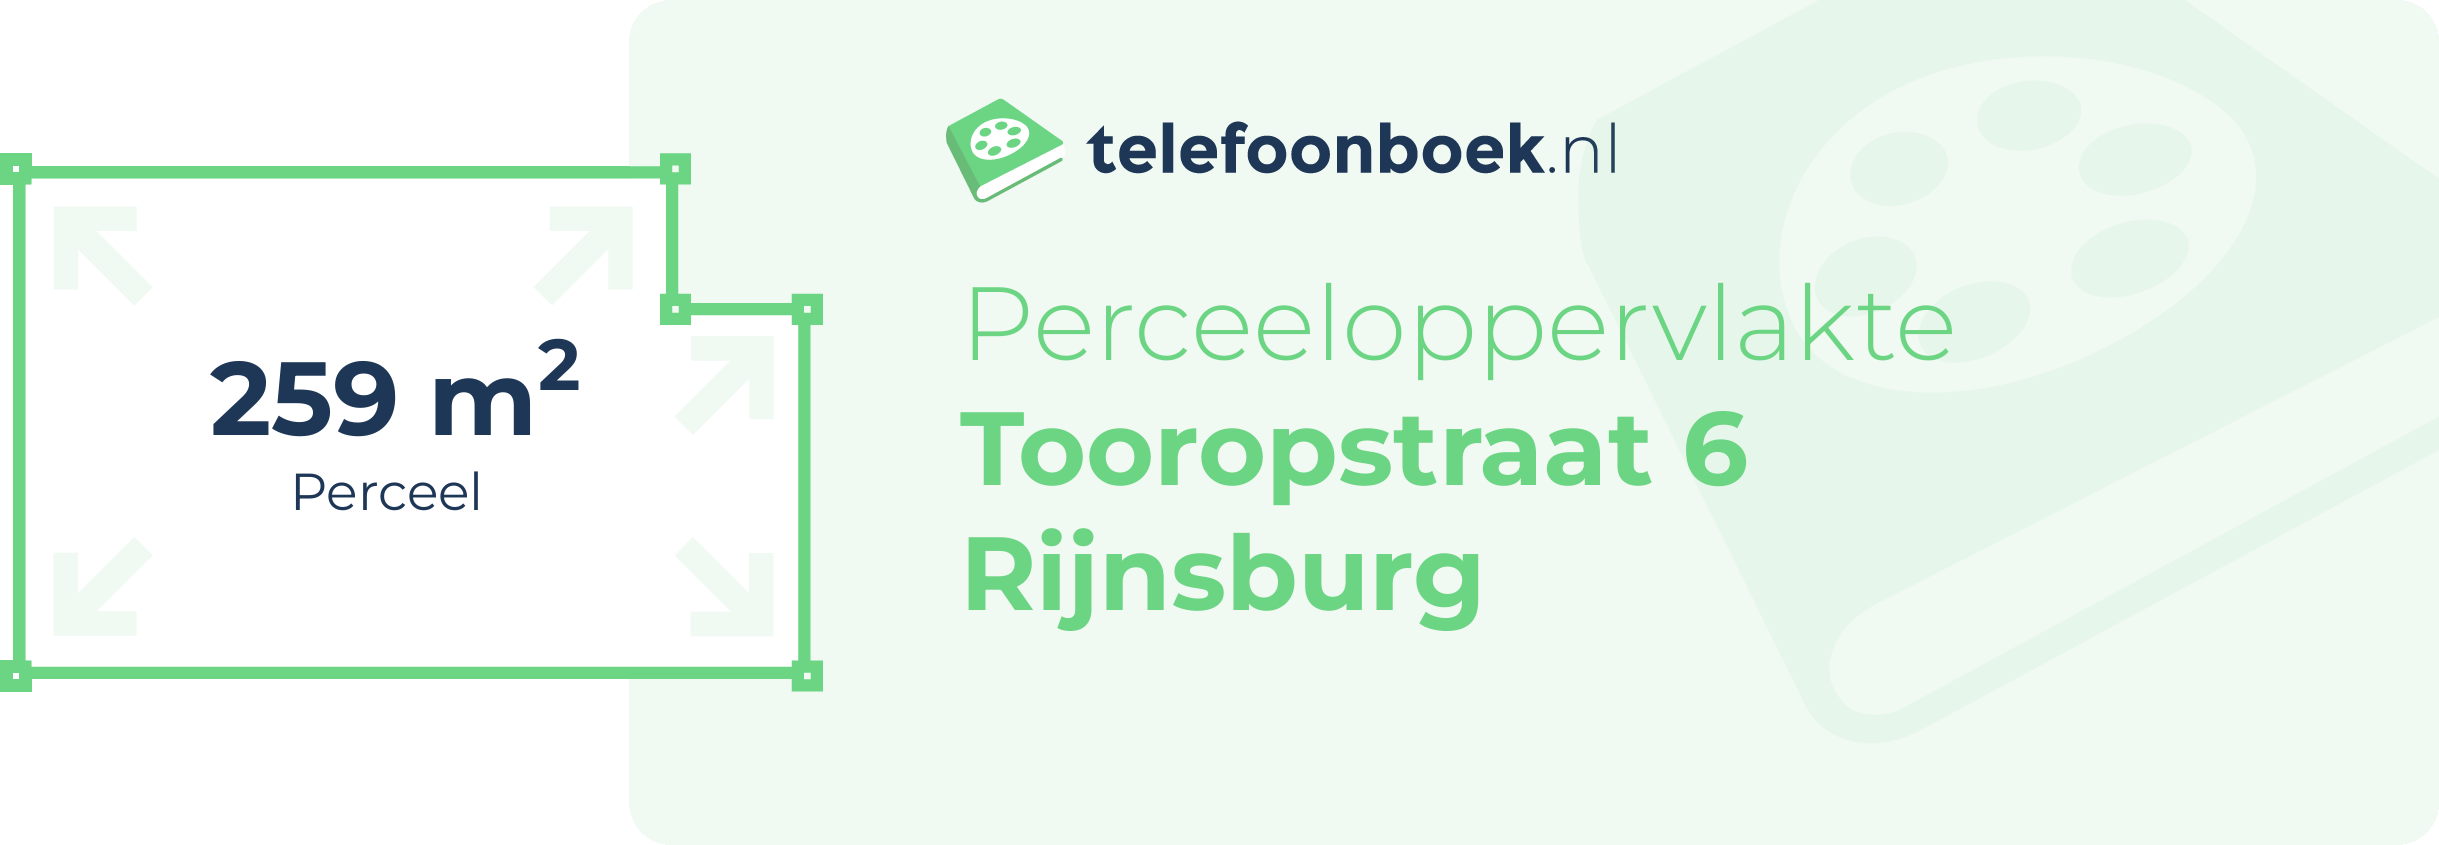 Perceeloppervlakte Tooropstraat 6 Rijnsburg